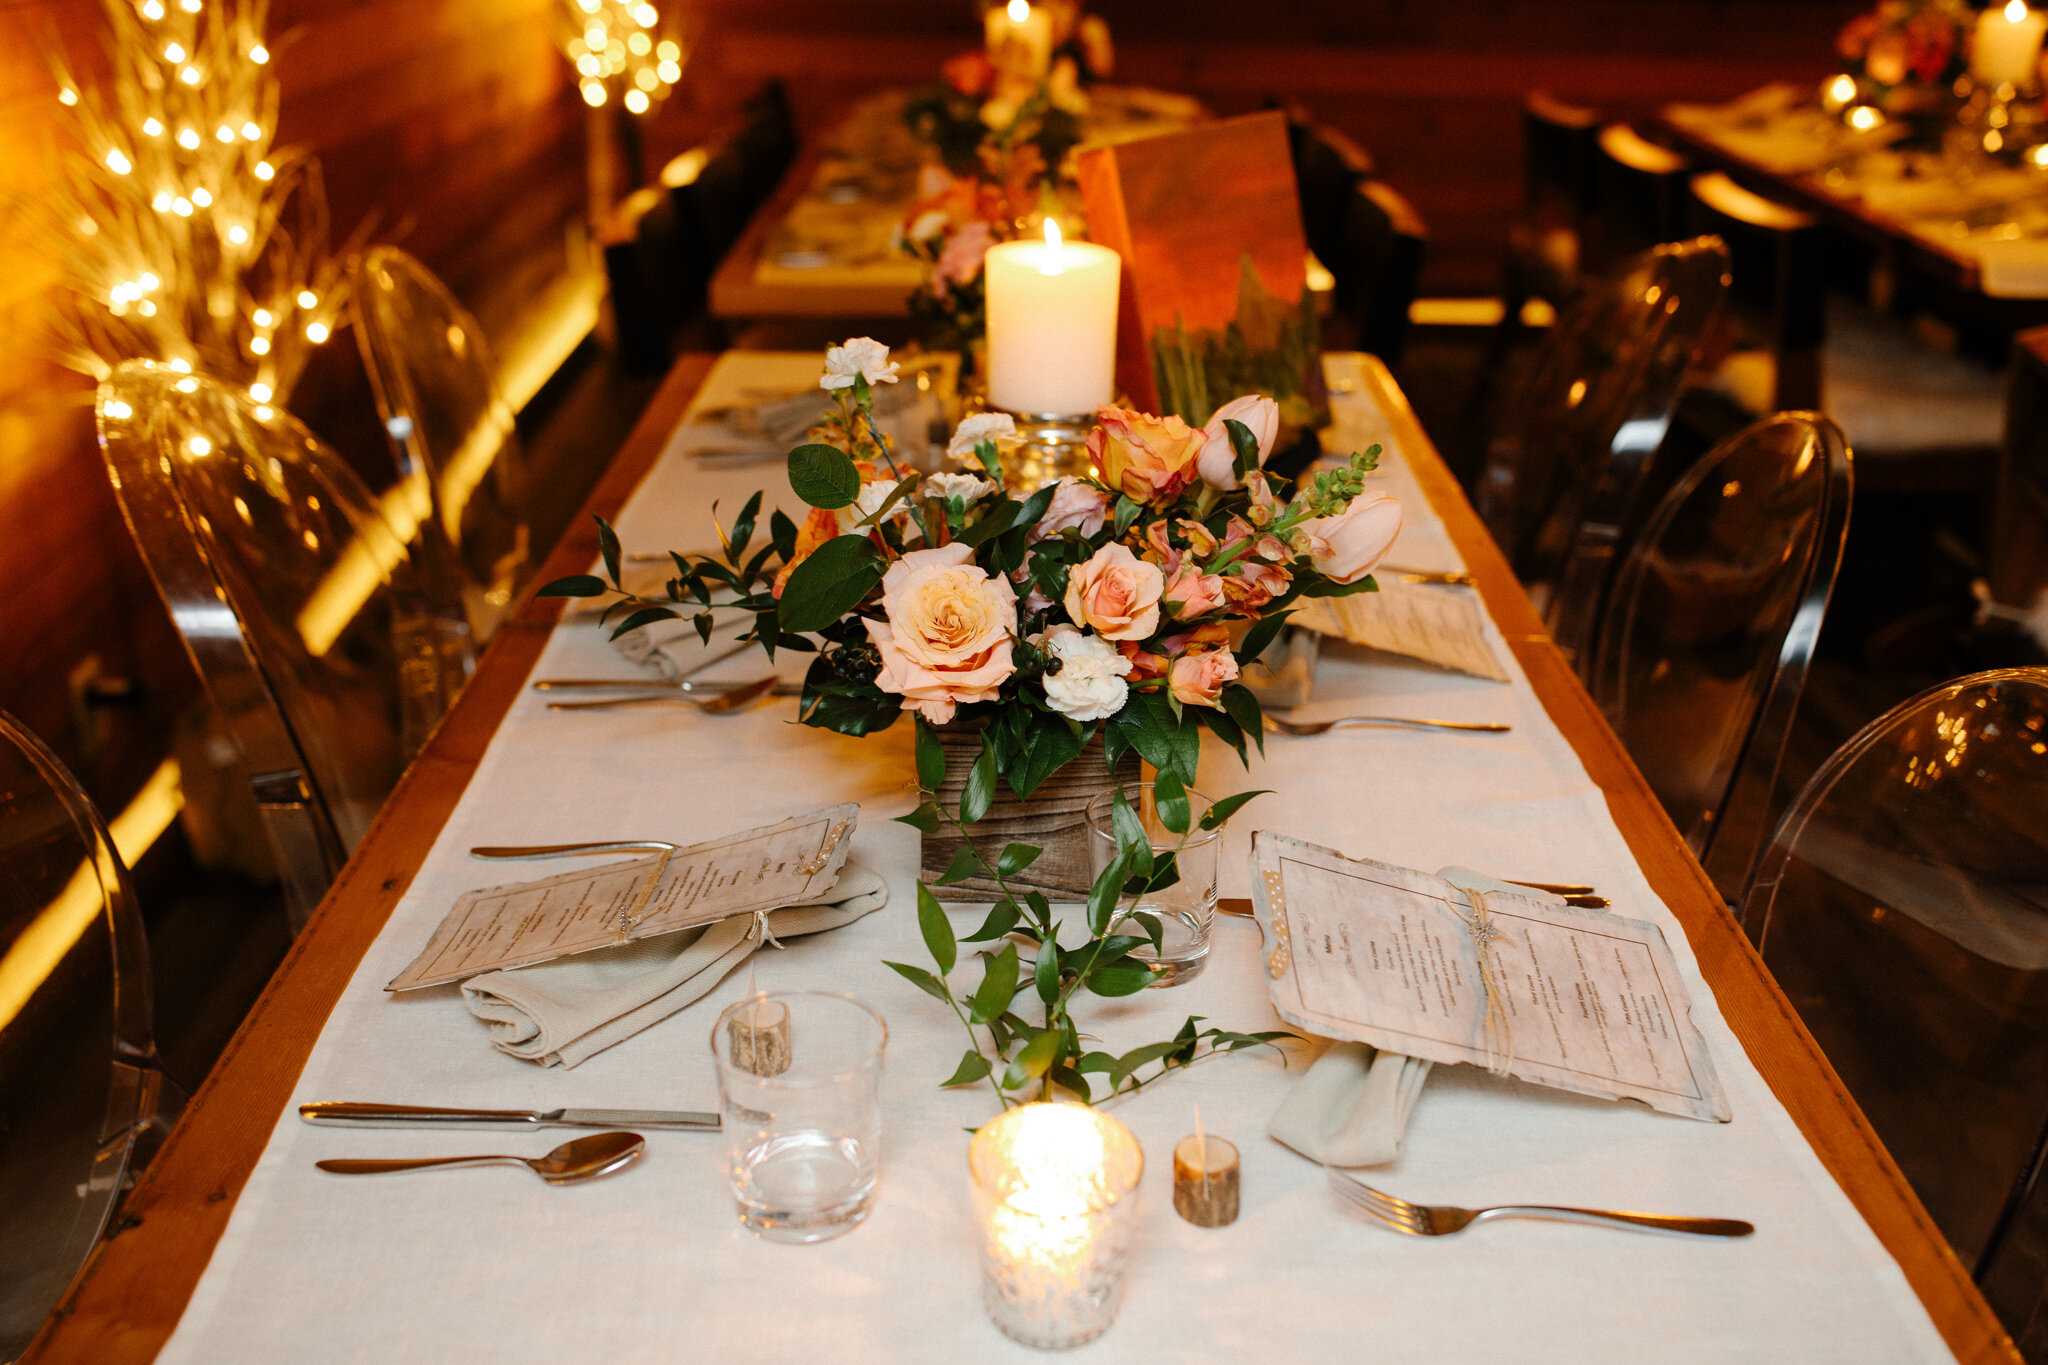 Intimate wedding dinner at Bruce Wine Bar in Thornbury with cora